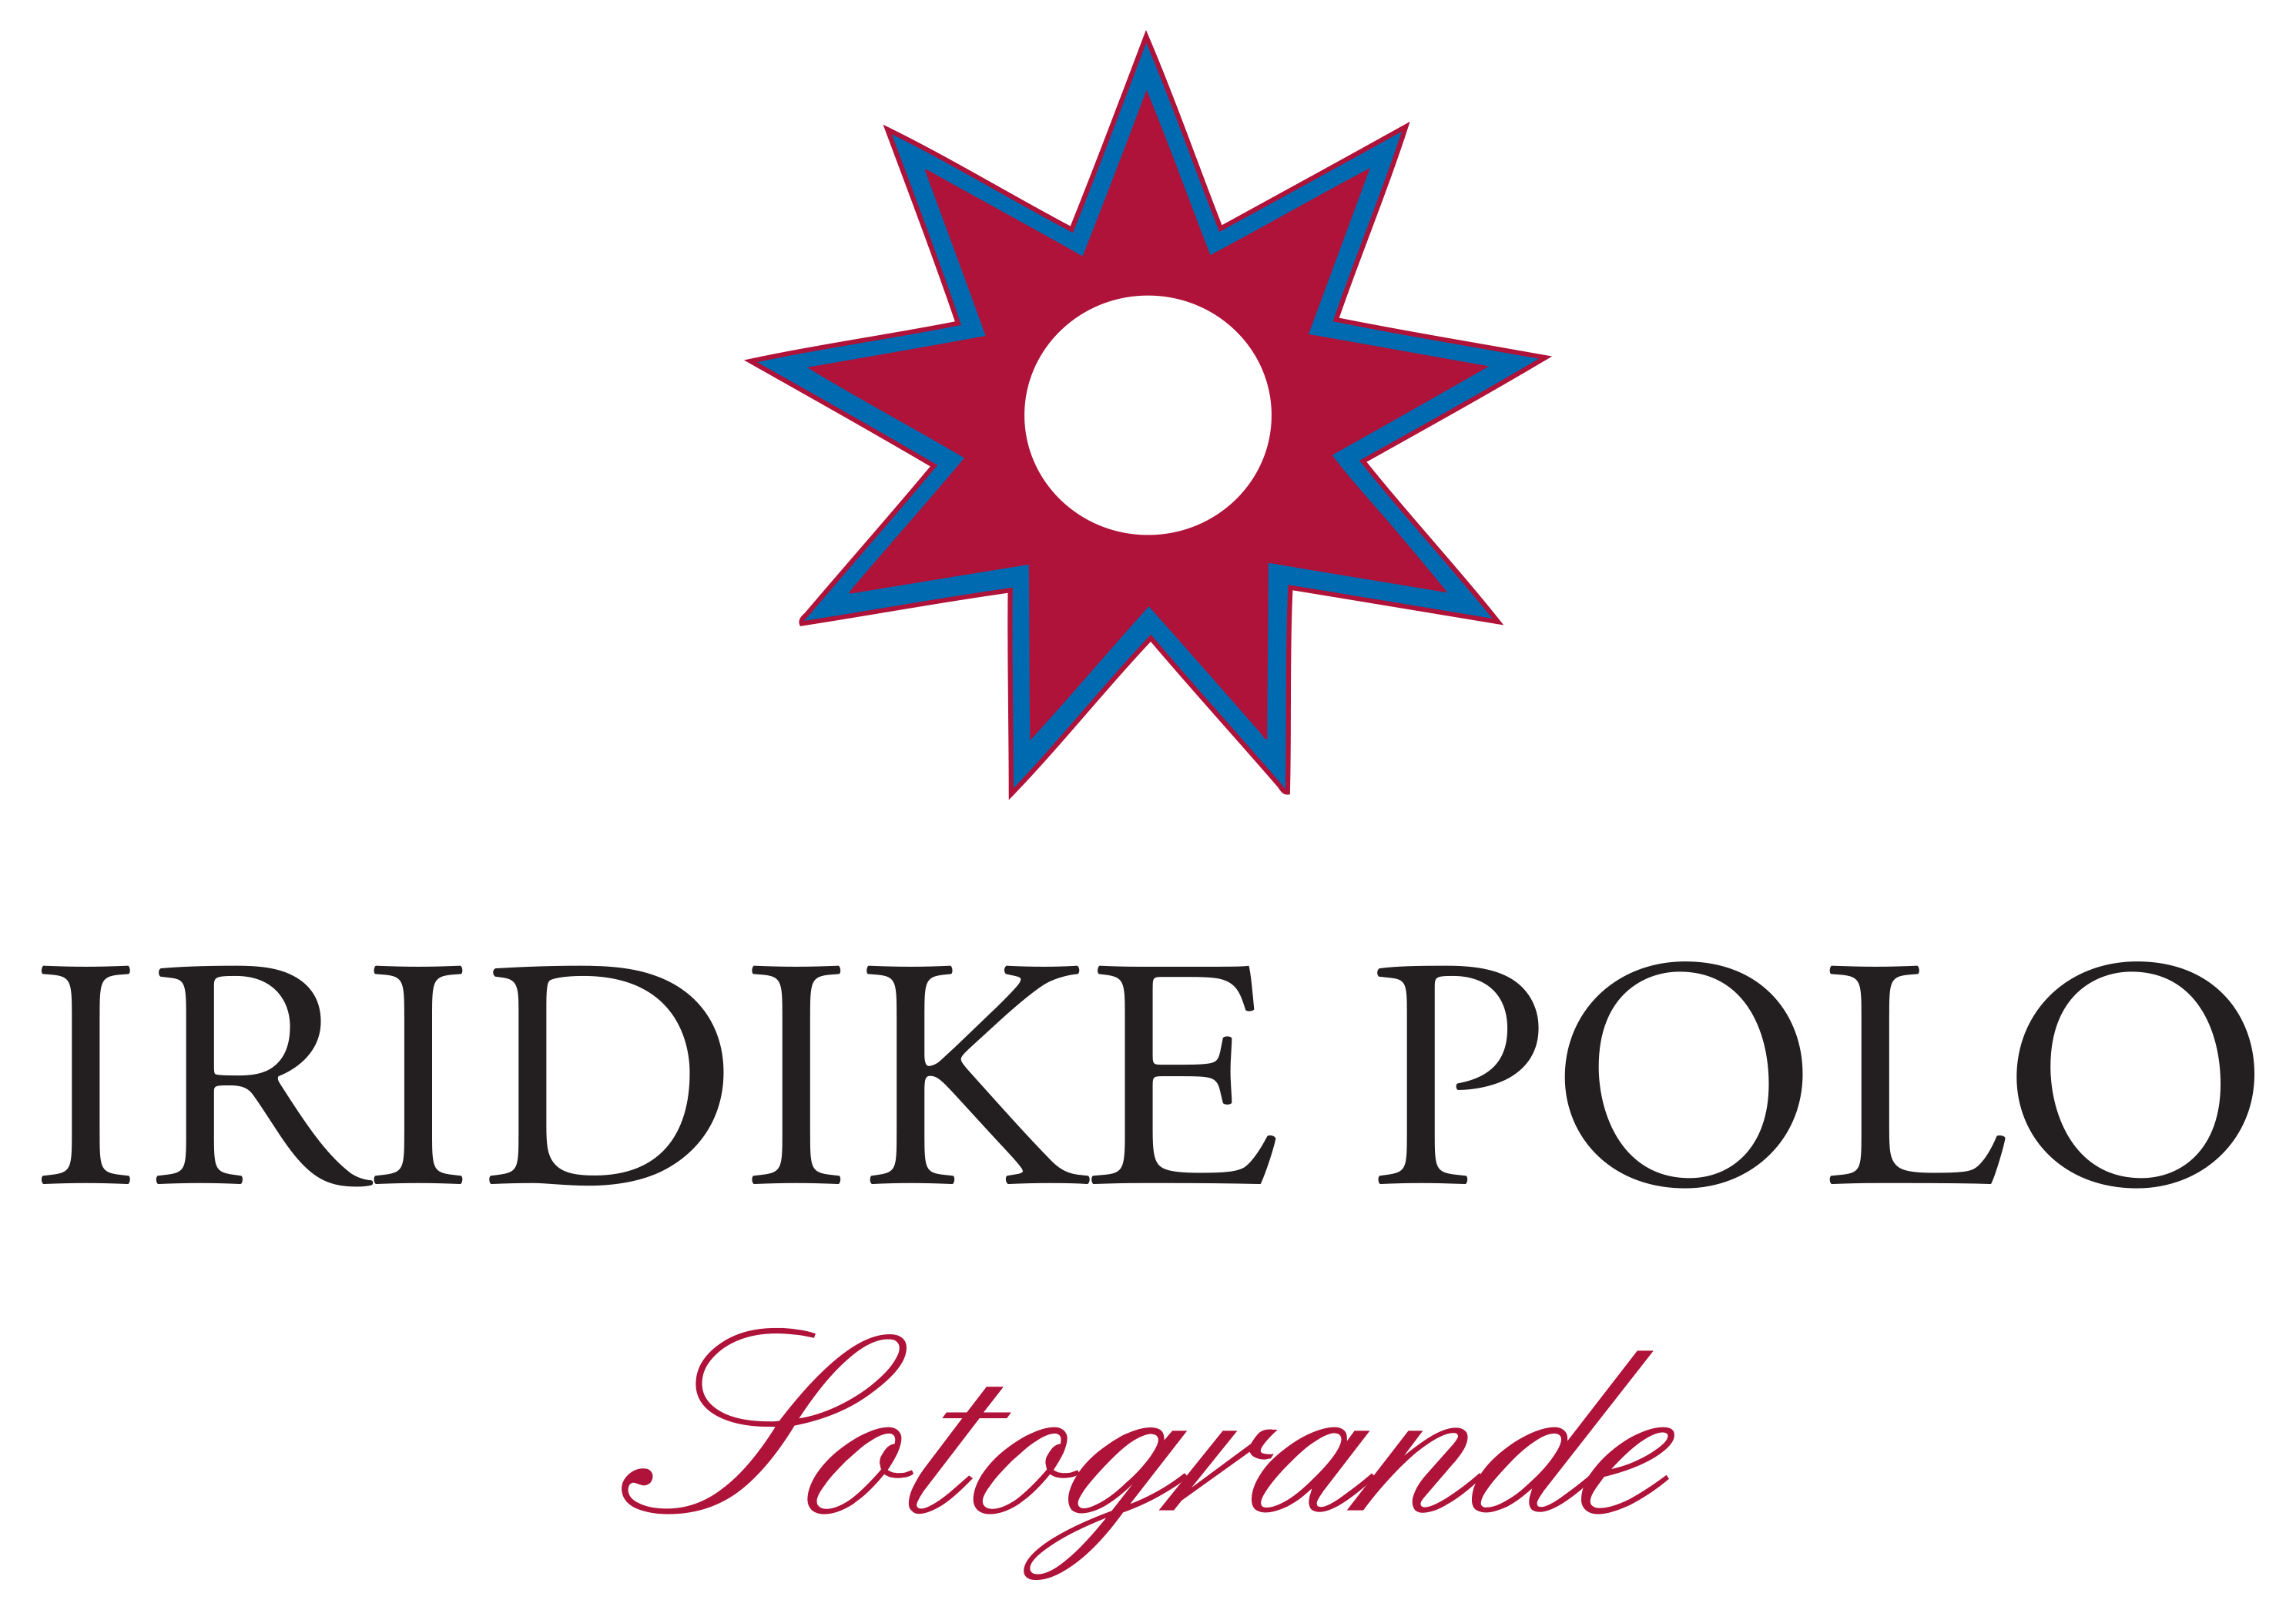 Polo Club Sotogrande | Iridike Polo Club